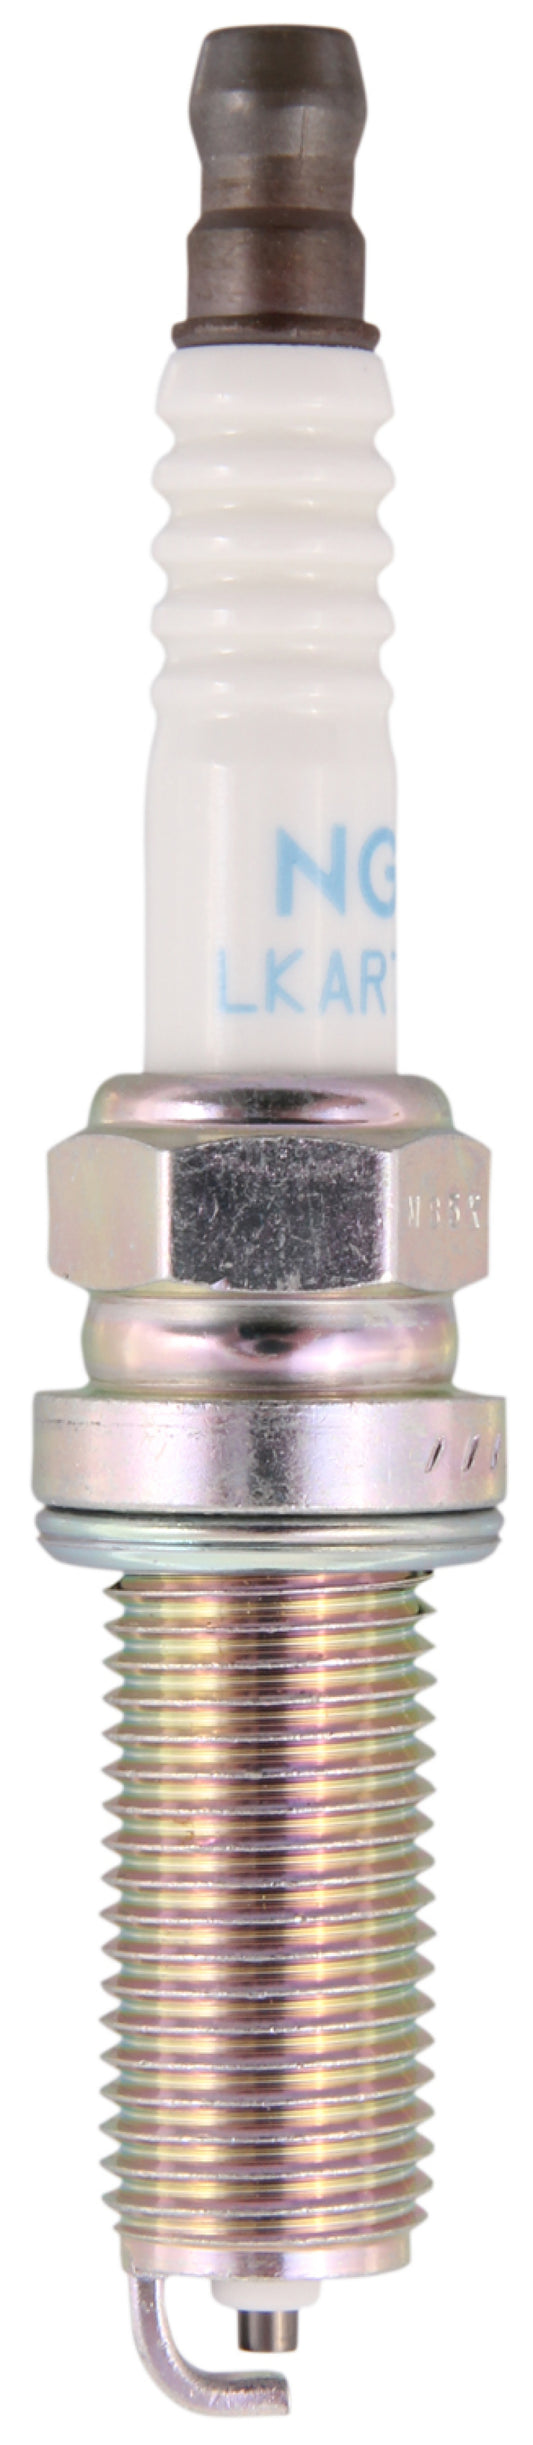 NGK Standard Spark Plug Box of 4 (LKAR7C-9) -  Shop now at Performance Car Parts